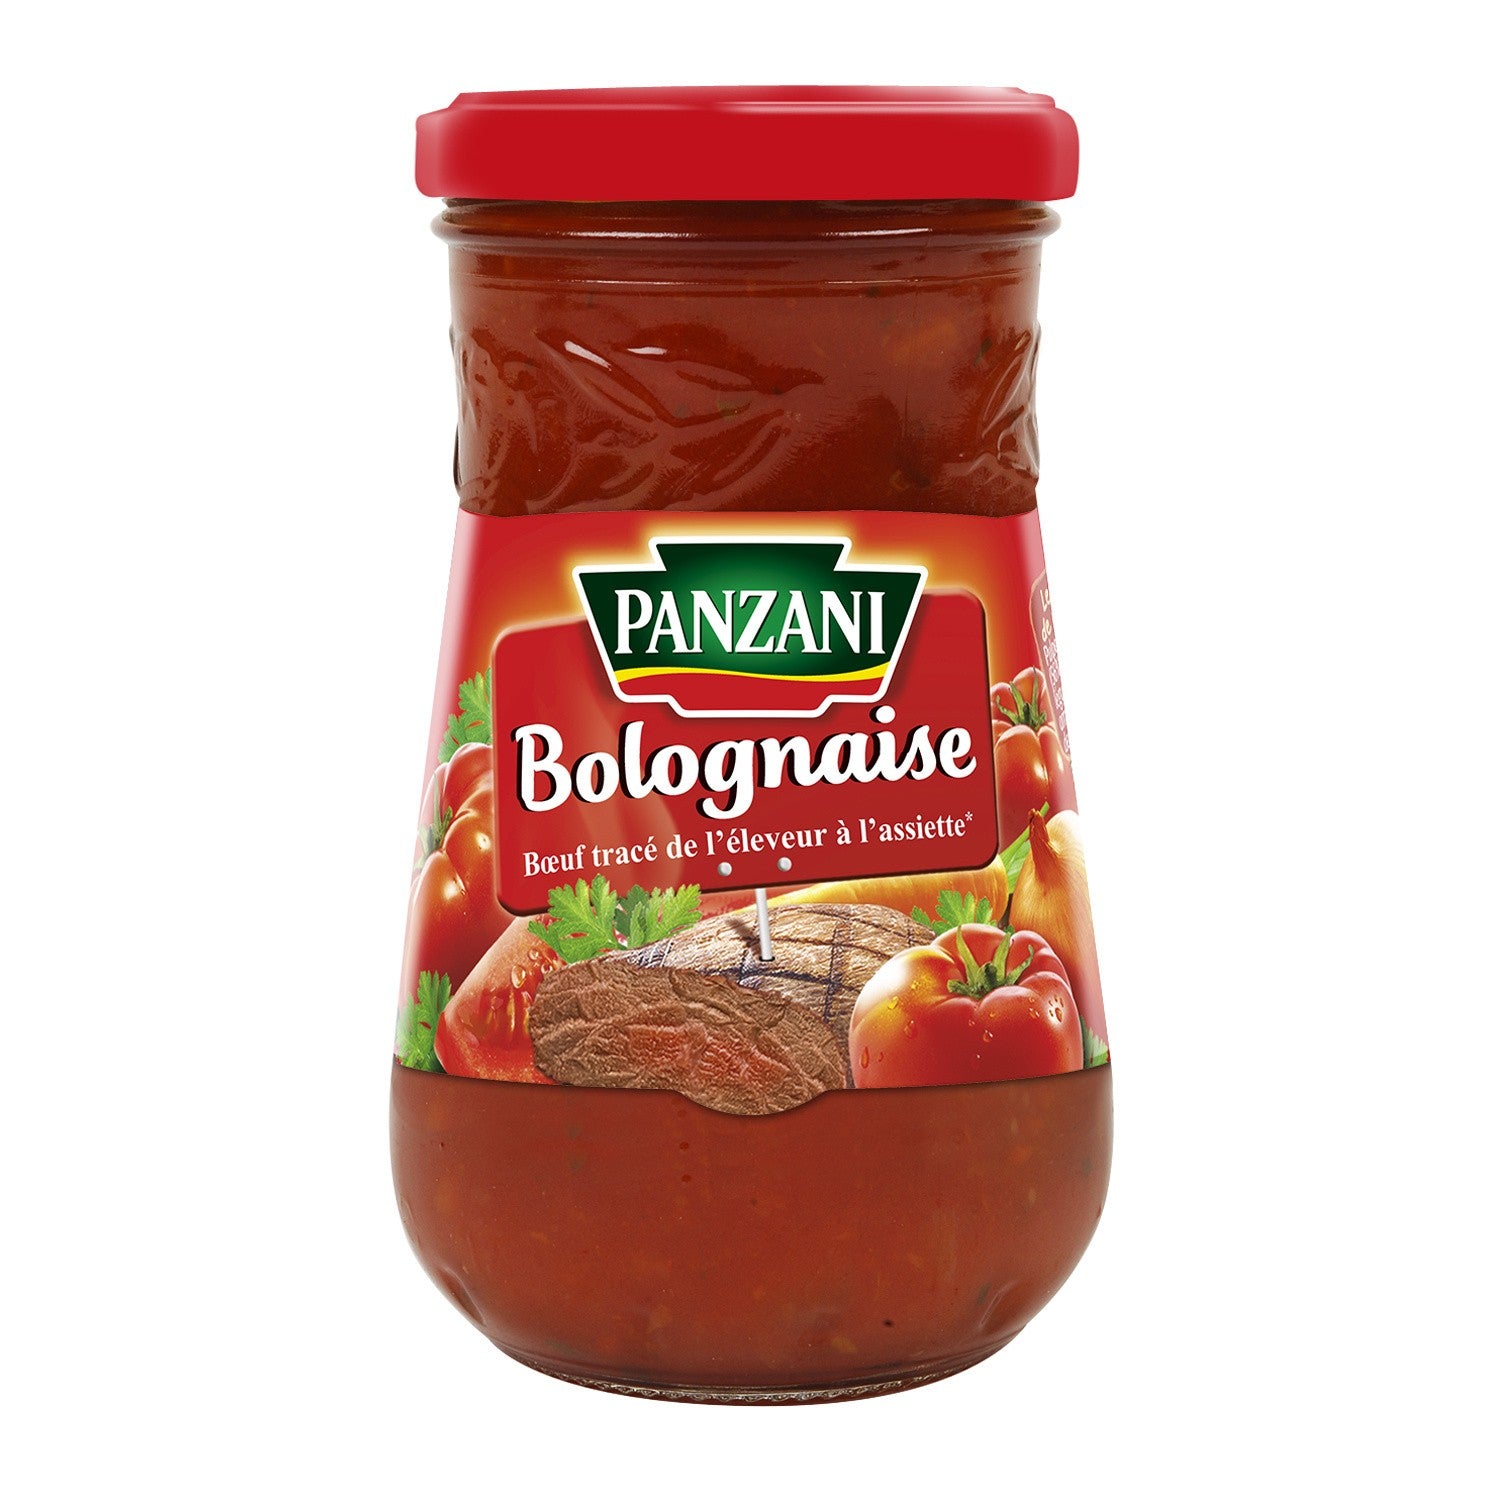 tah>Panzani Bolognese Pasta Sauce 200g